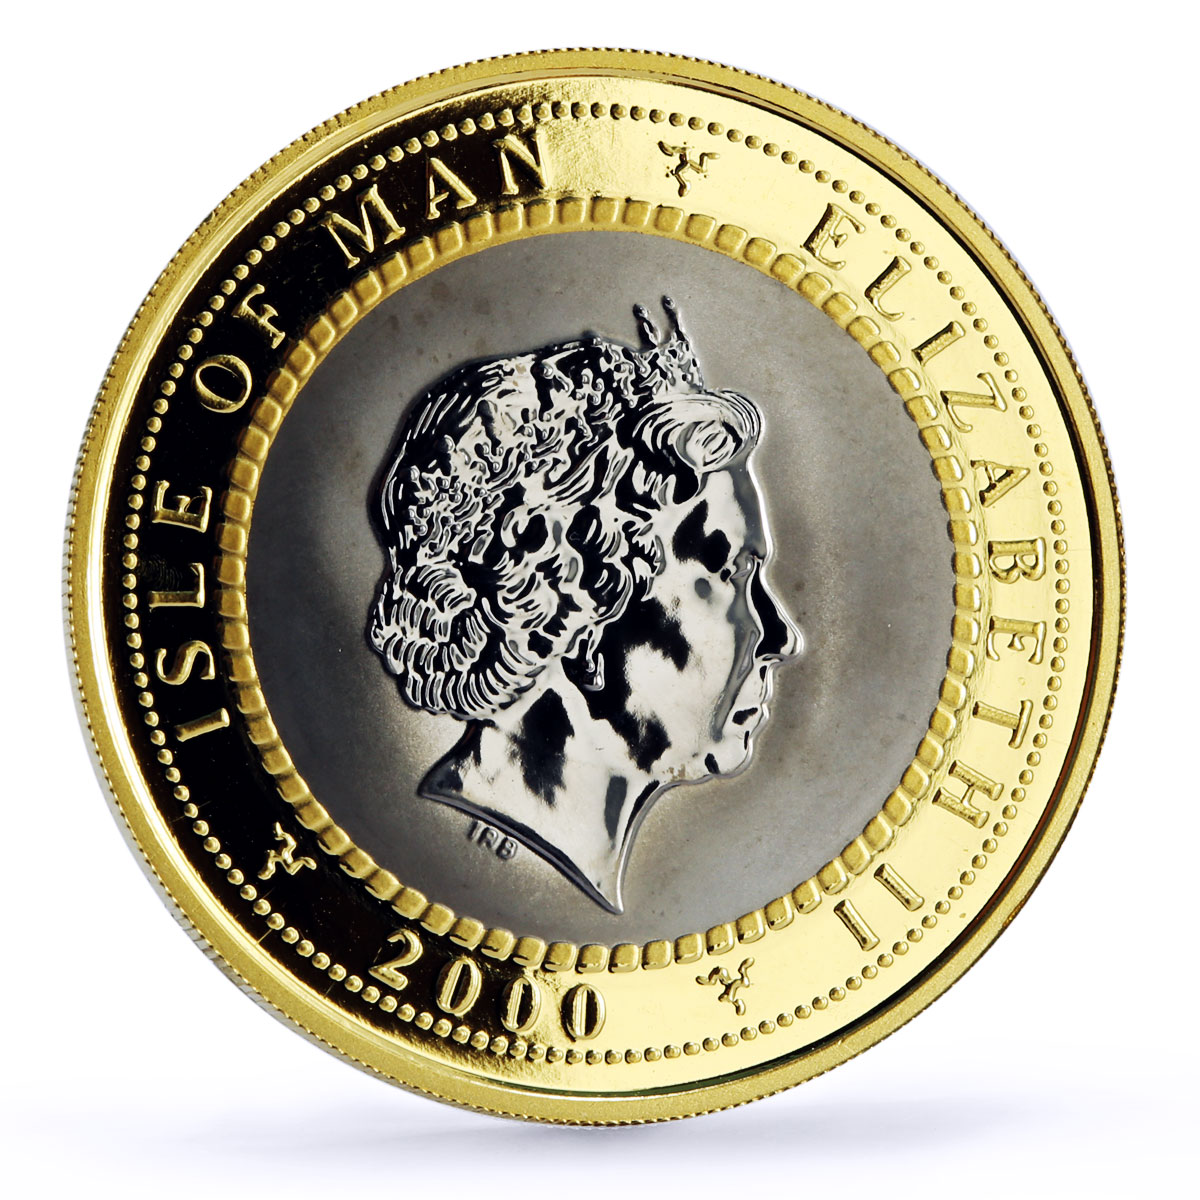 Isle of Man 1/2 crown Millennium Greenwich Meridian gold and titanium coin 2000